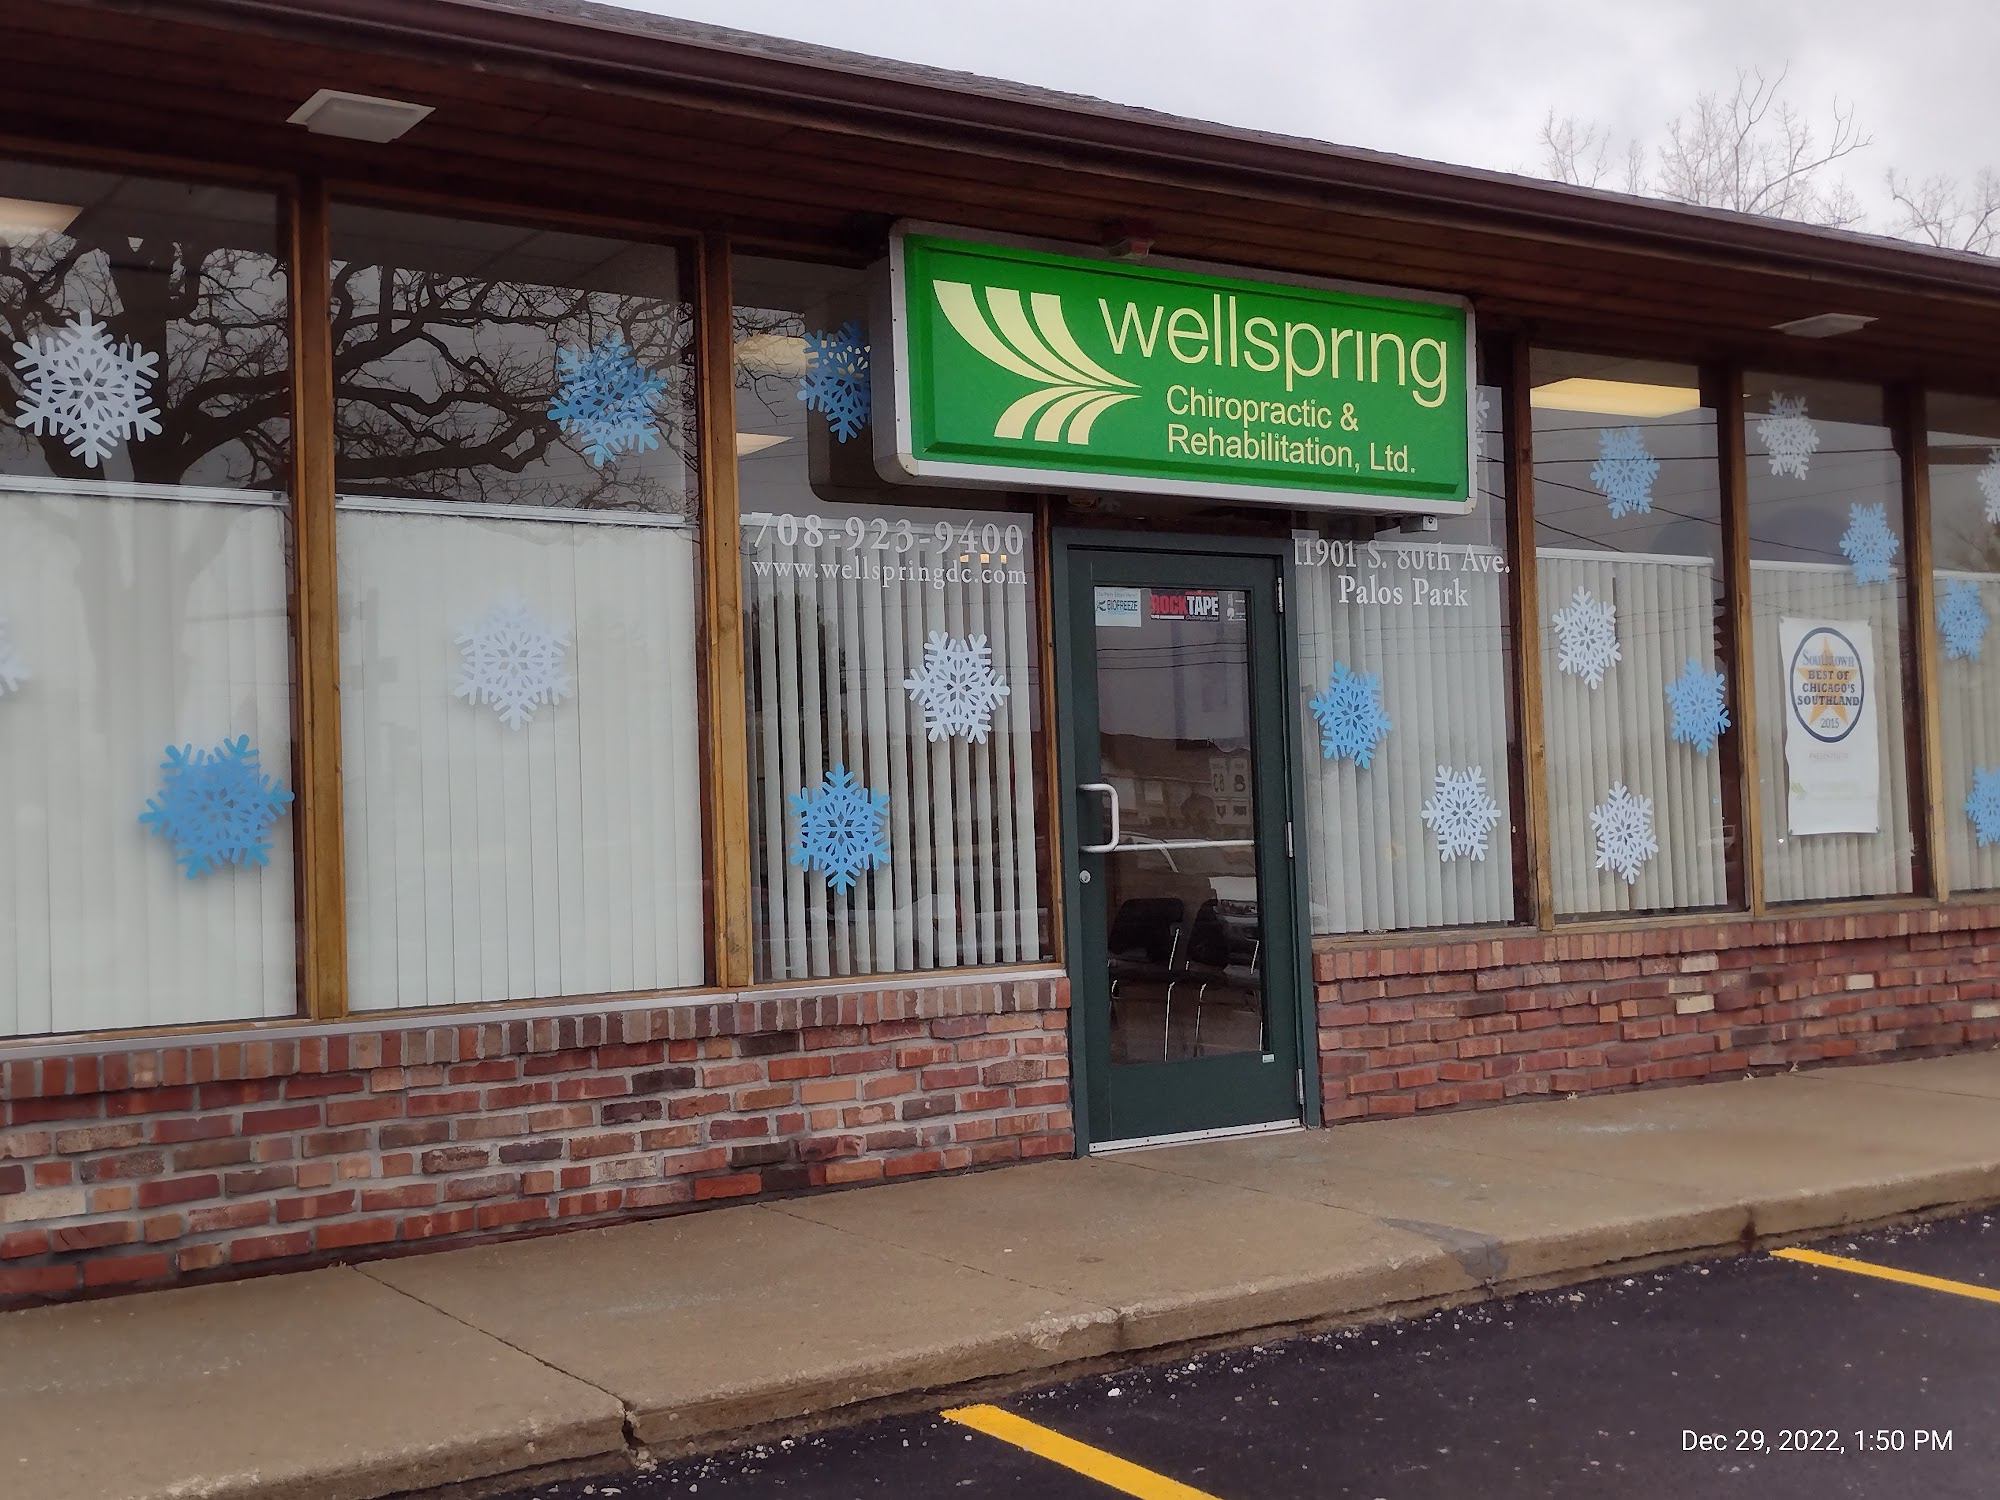 Wellspring Chiropractic & Rehabilitation, Ltd.